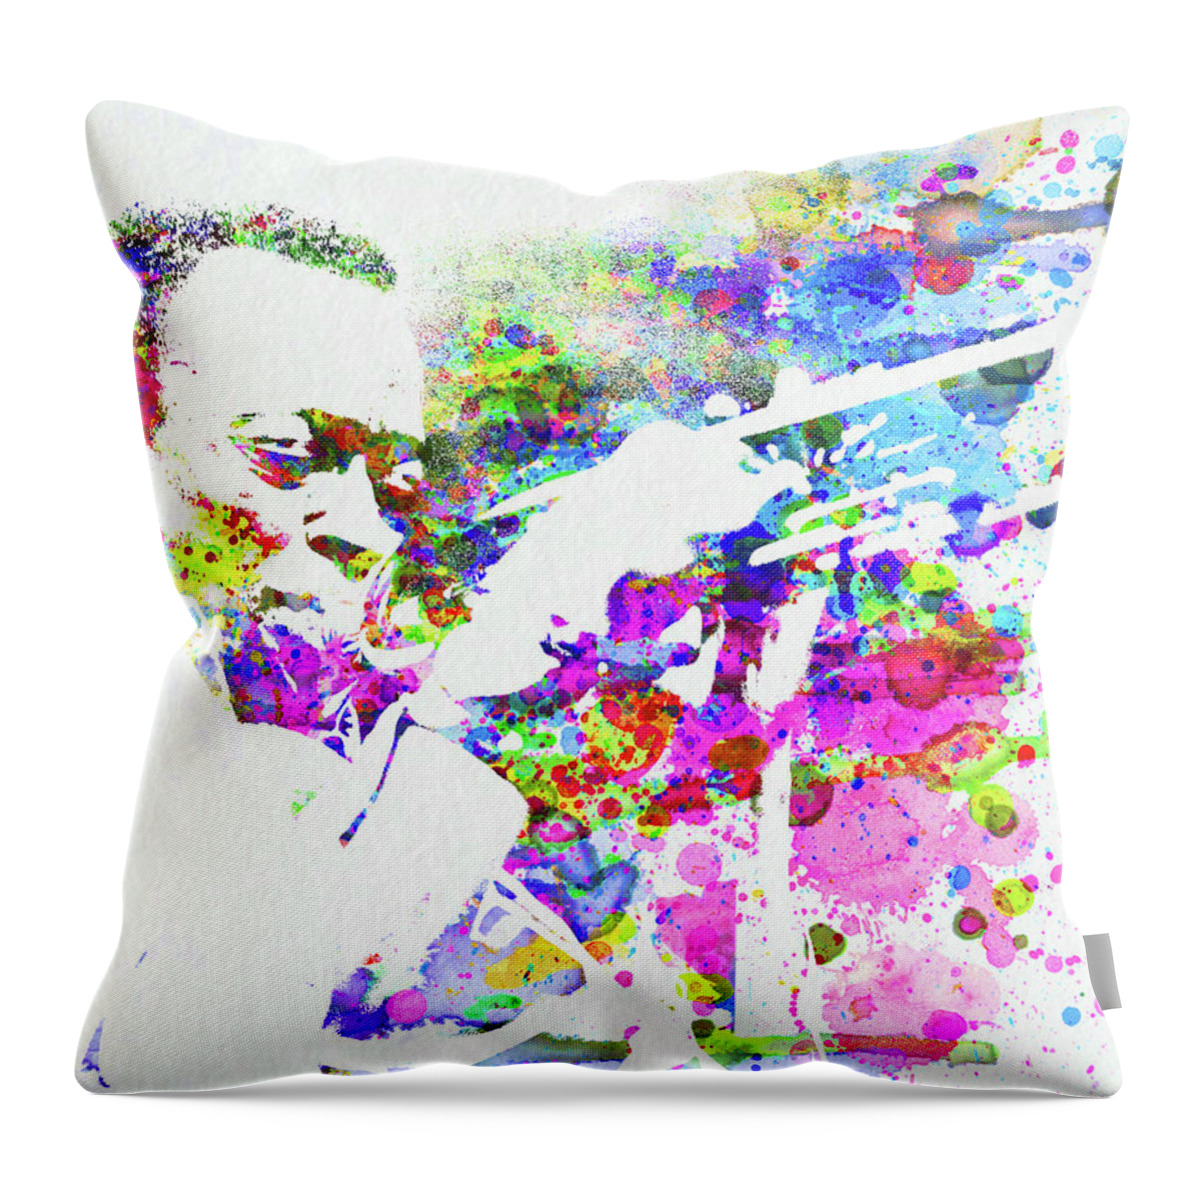 John Coltrane Throw Pillow featuring the mixed media Legendary John Coltrane Watercolor by Naxart Studio